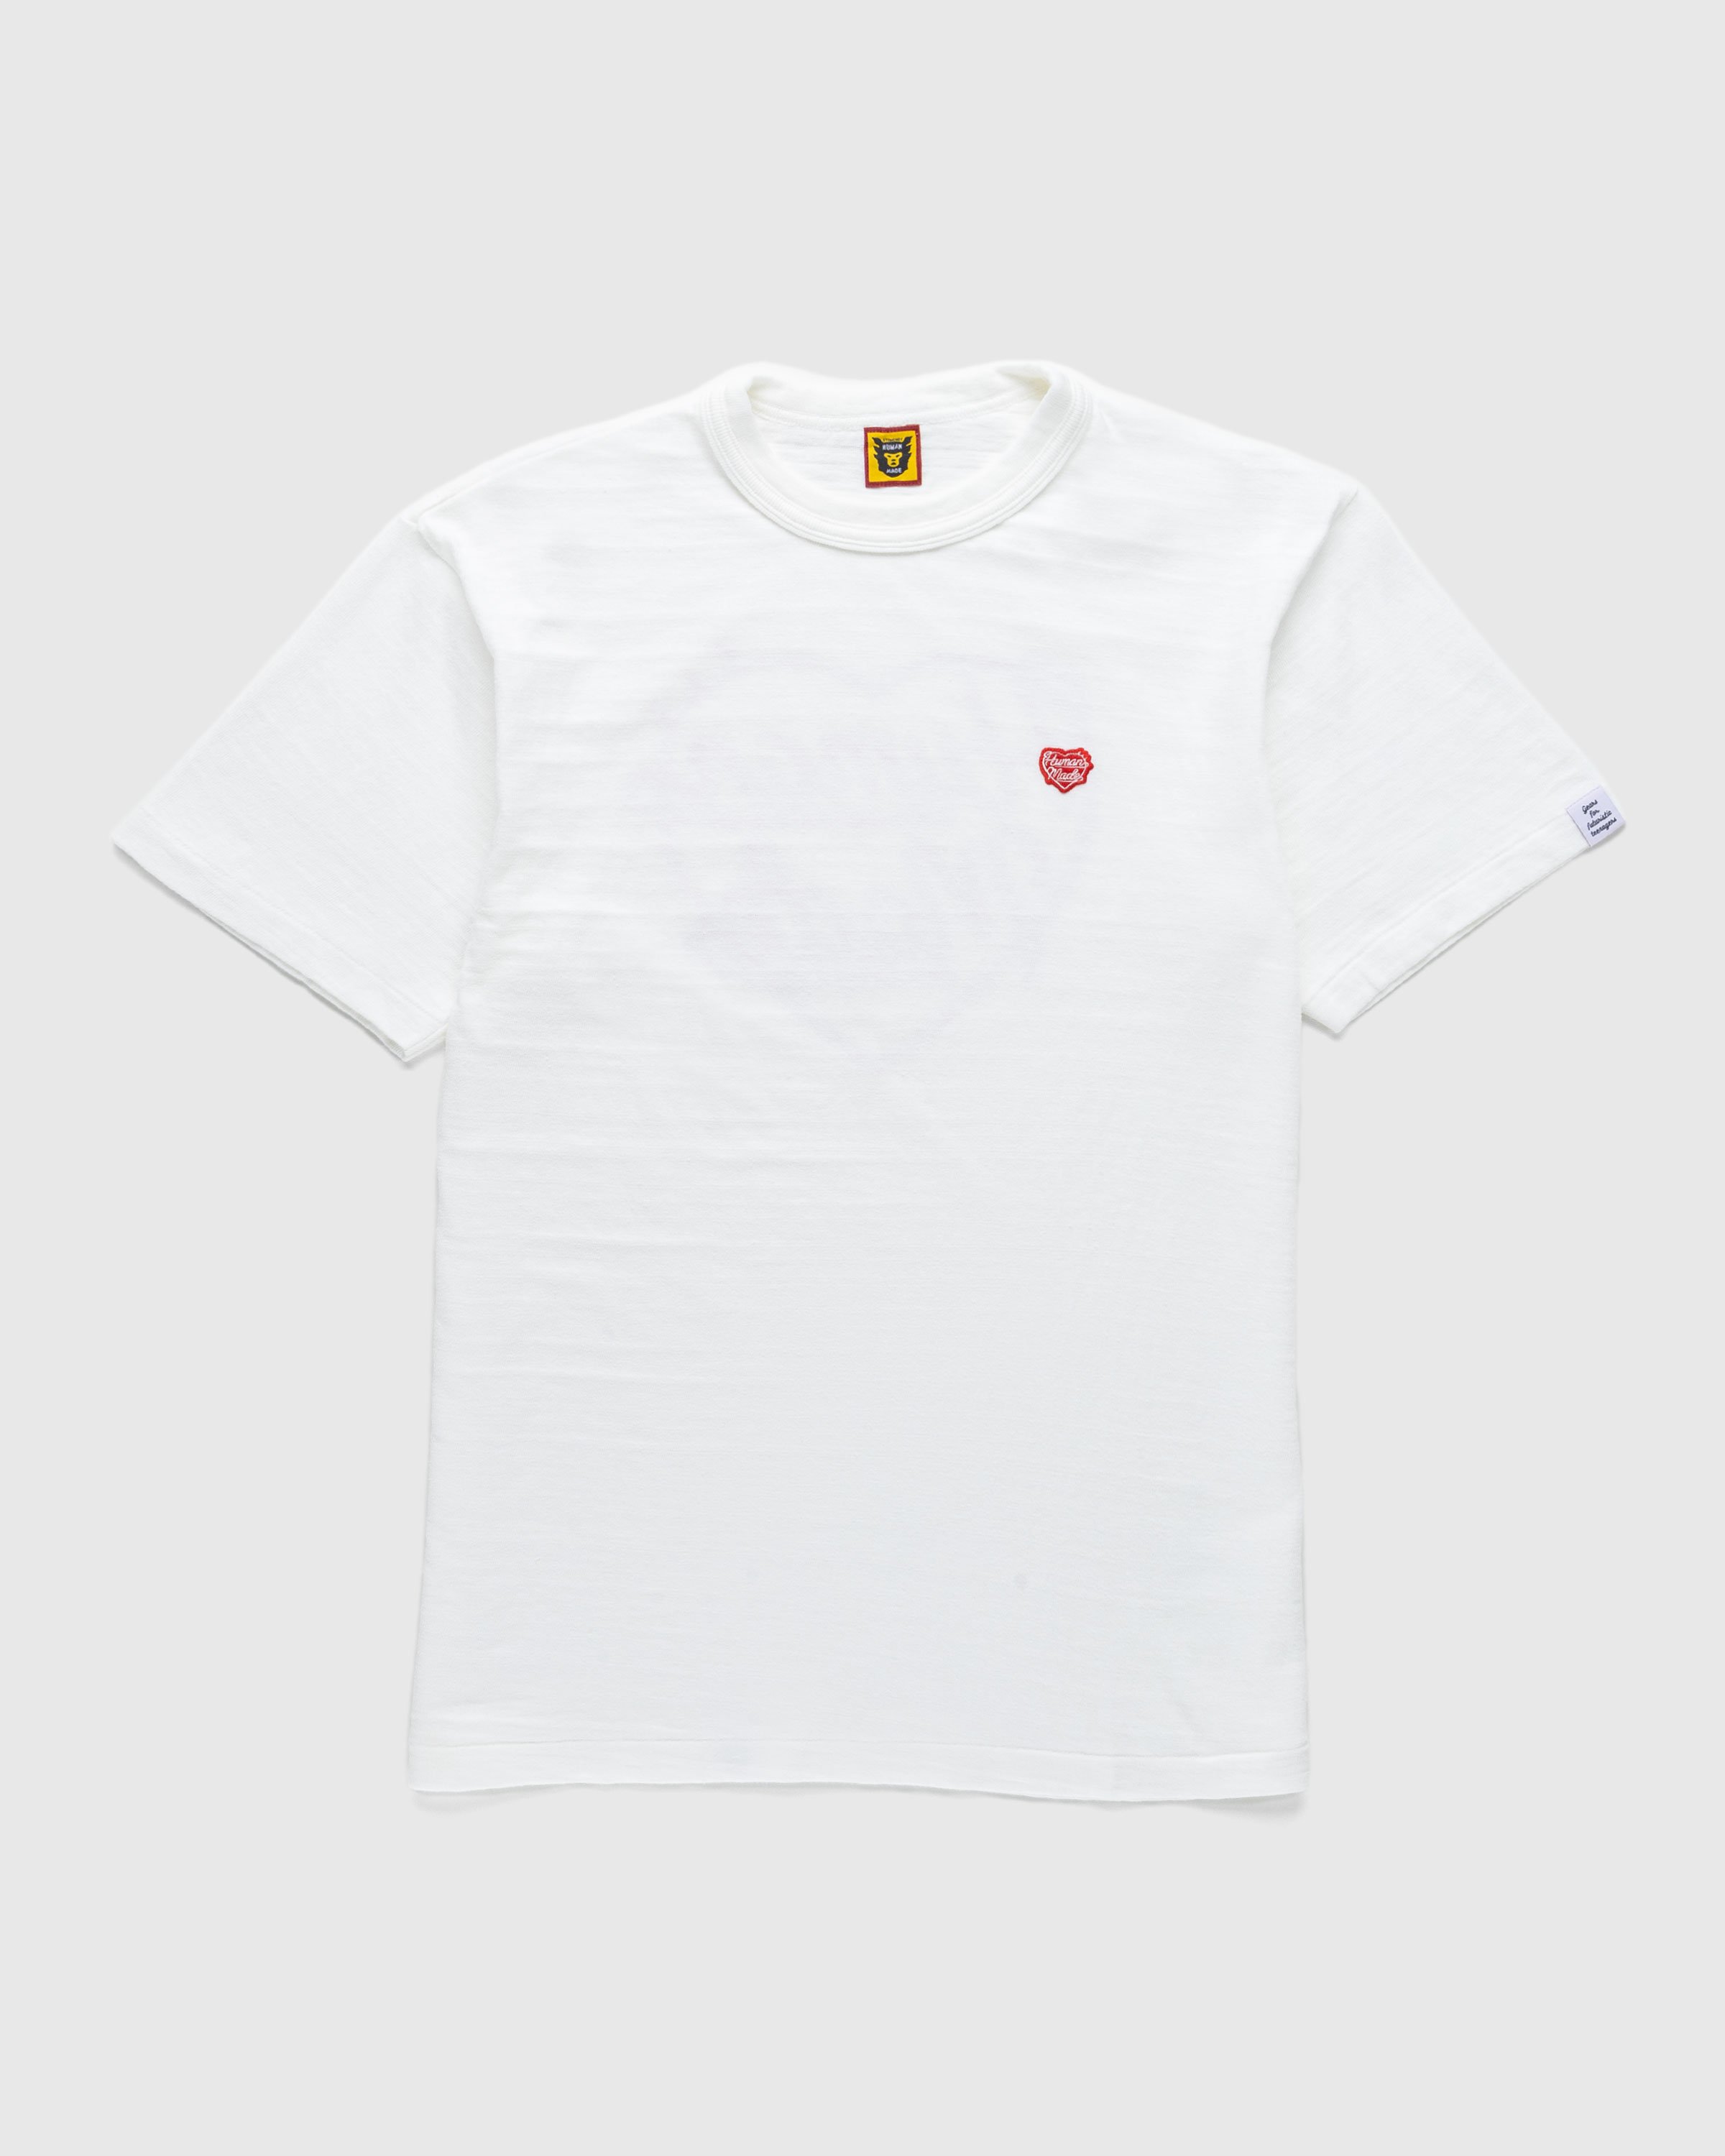 Human Made - HEART BADGE T-SHIRT White - Clothing - White - Image 1